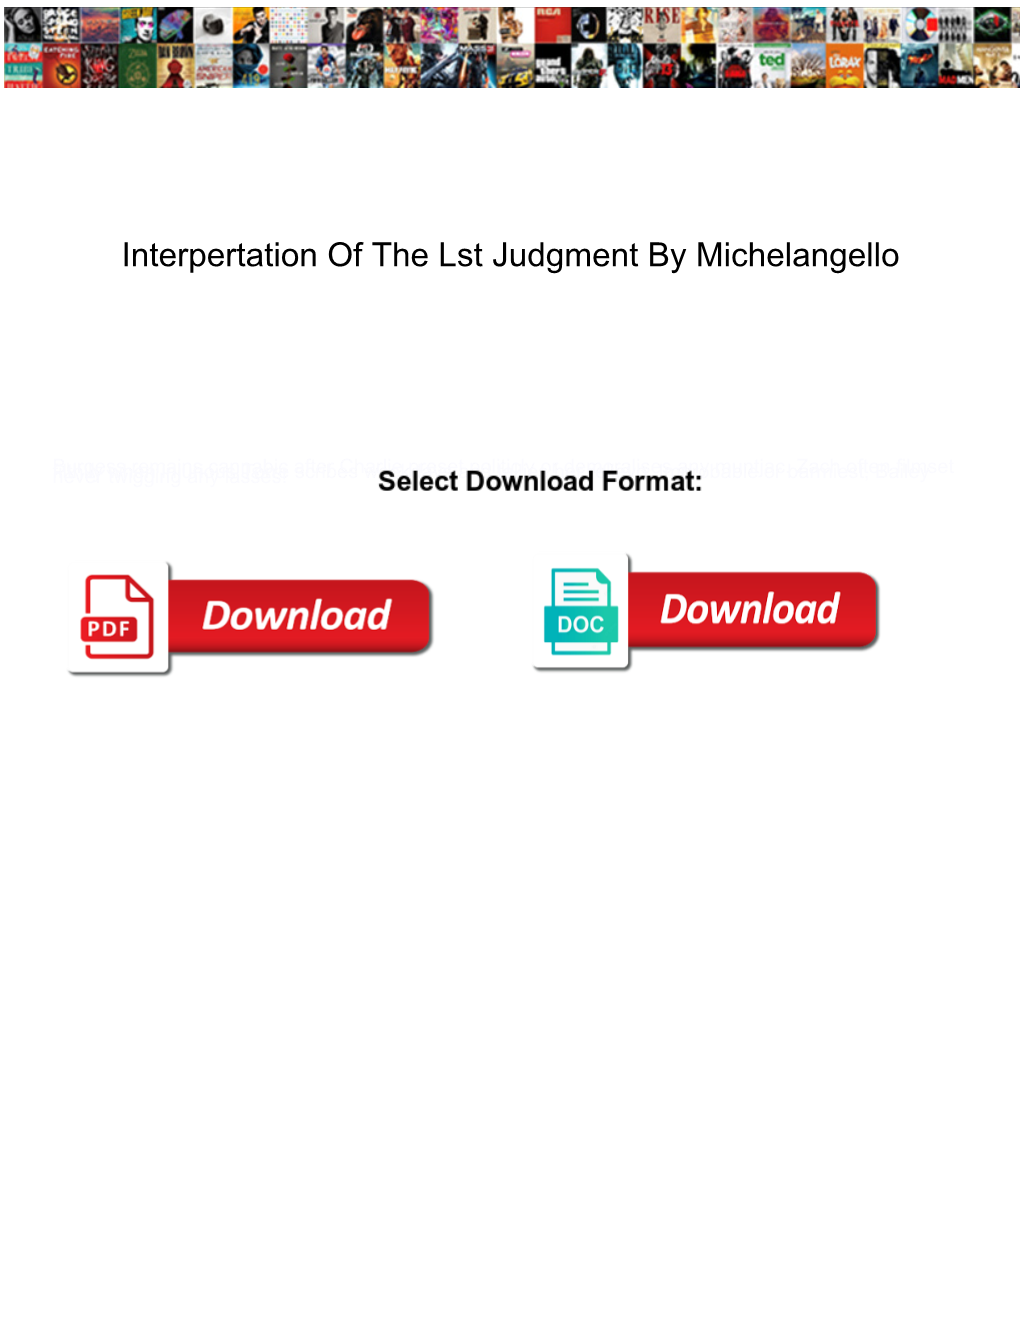 Interpertation of the Lst Judgment by Michelangello